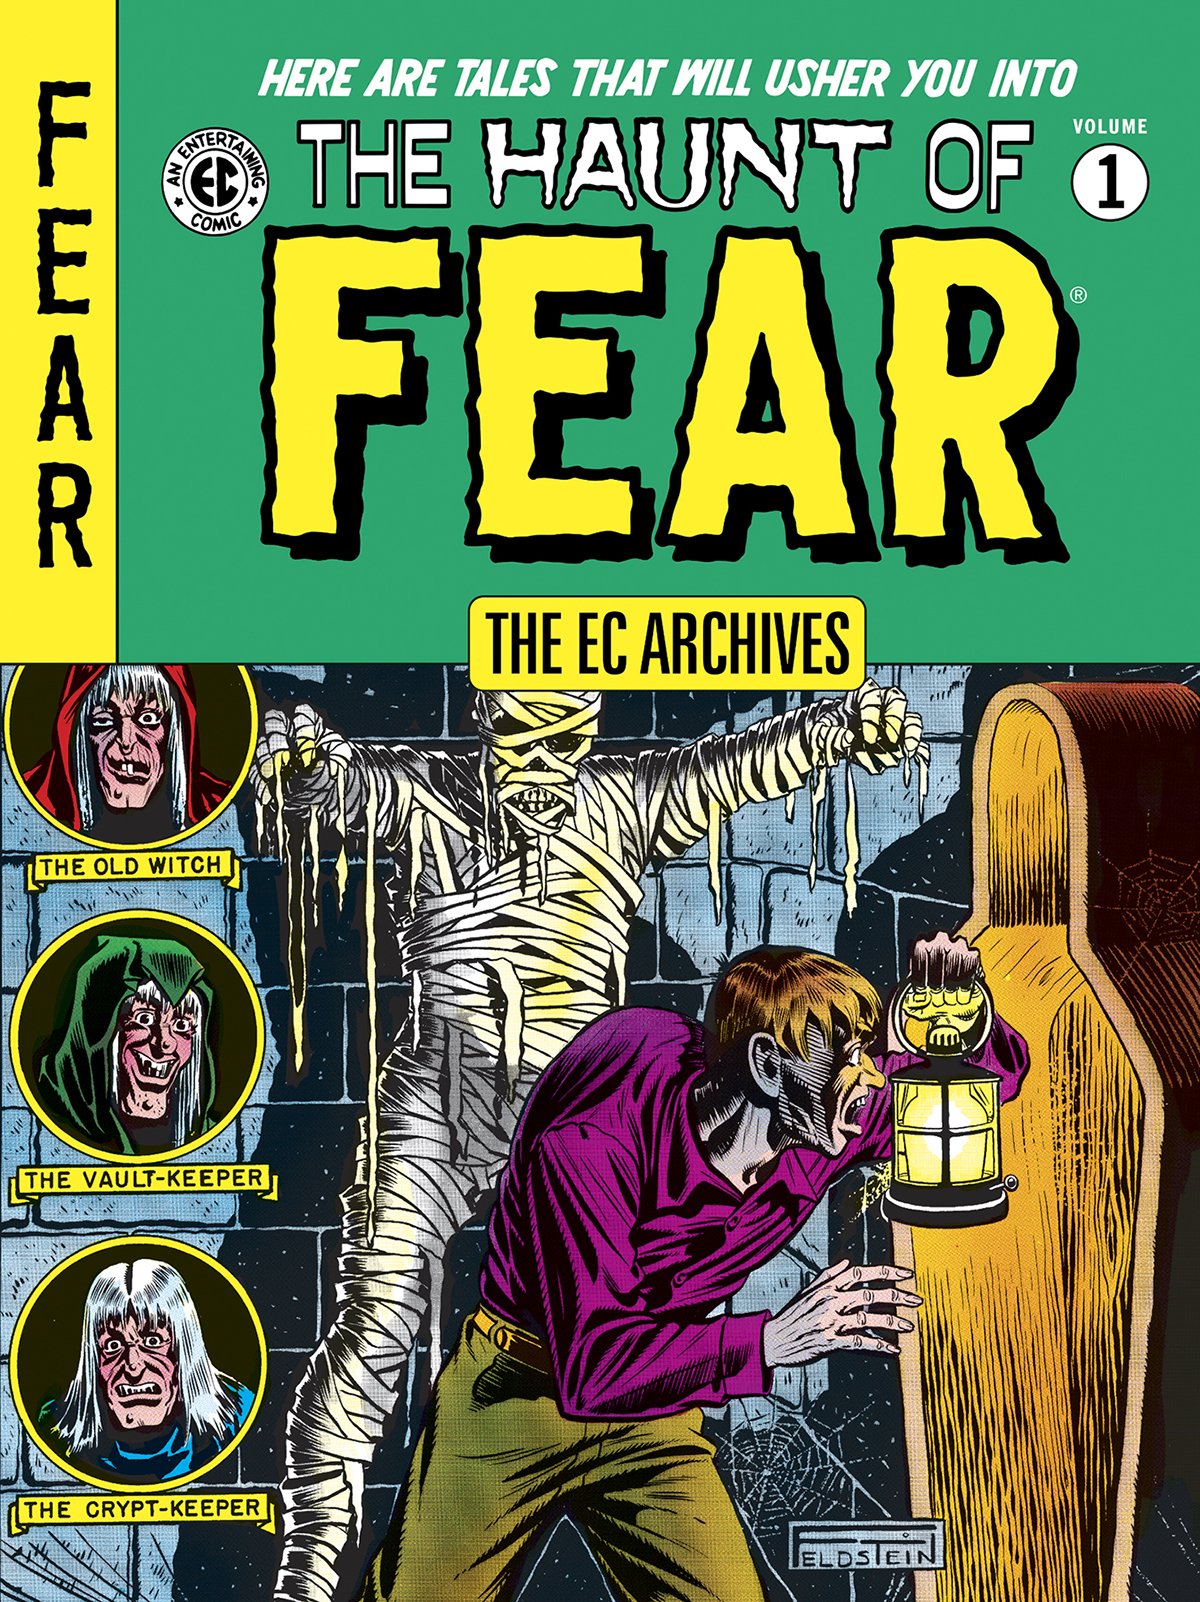 EC Archives: The Haunt of Fear Graphic Novel Volume 1